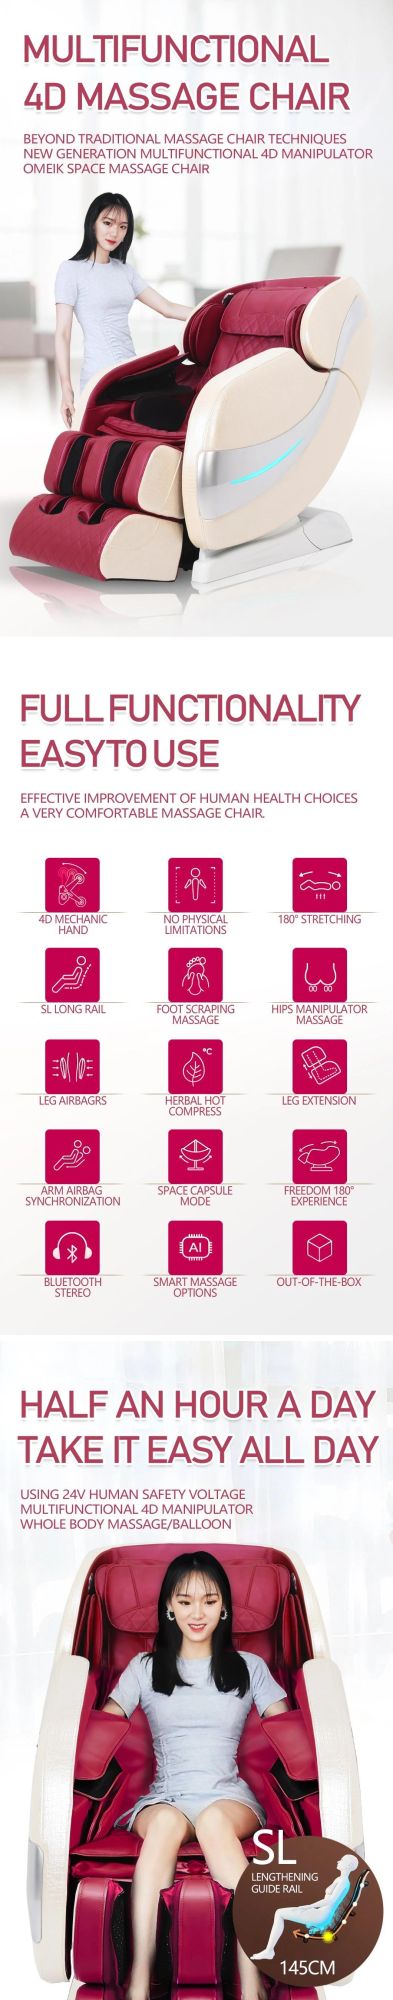 SL Track Electric Zero Gravity Full Body 4D Shaitsu Massage Chair